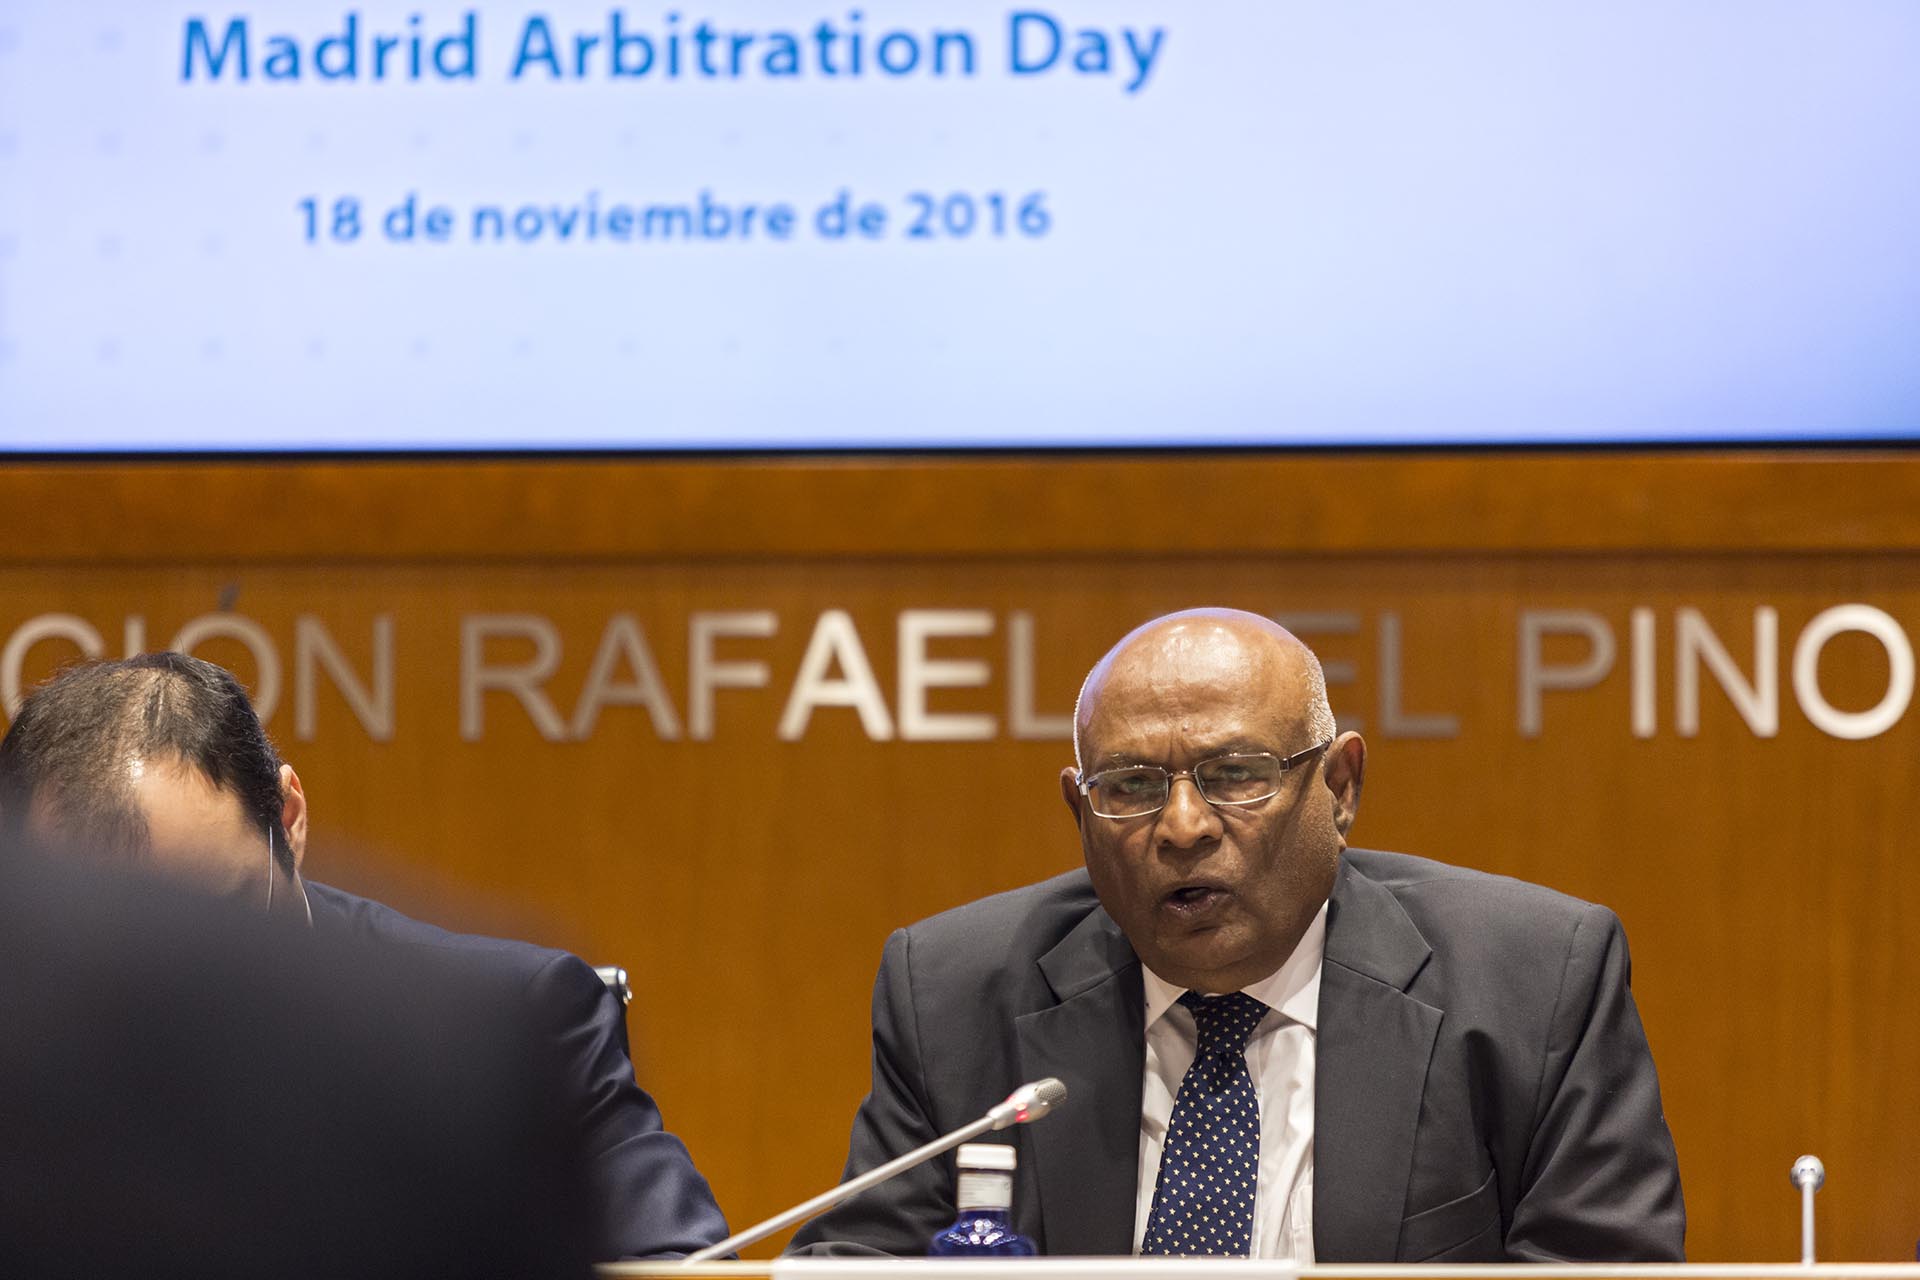 Madrid Arbitration Day